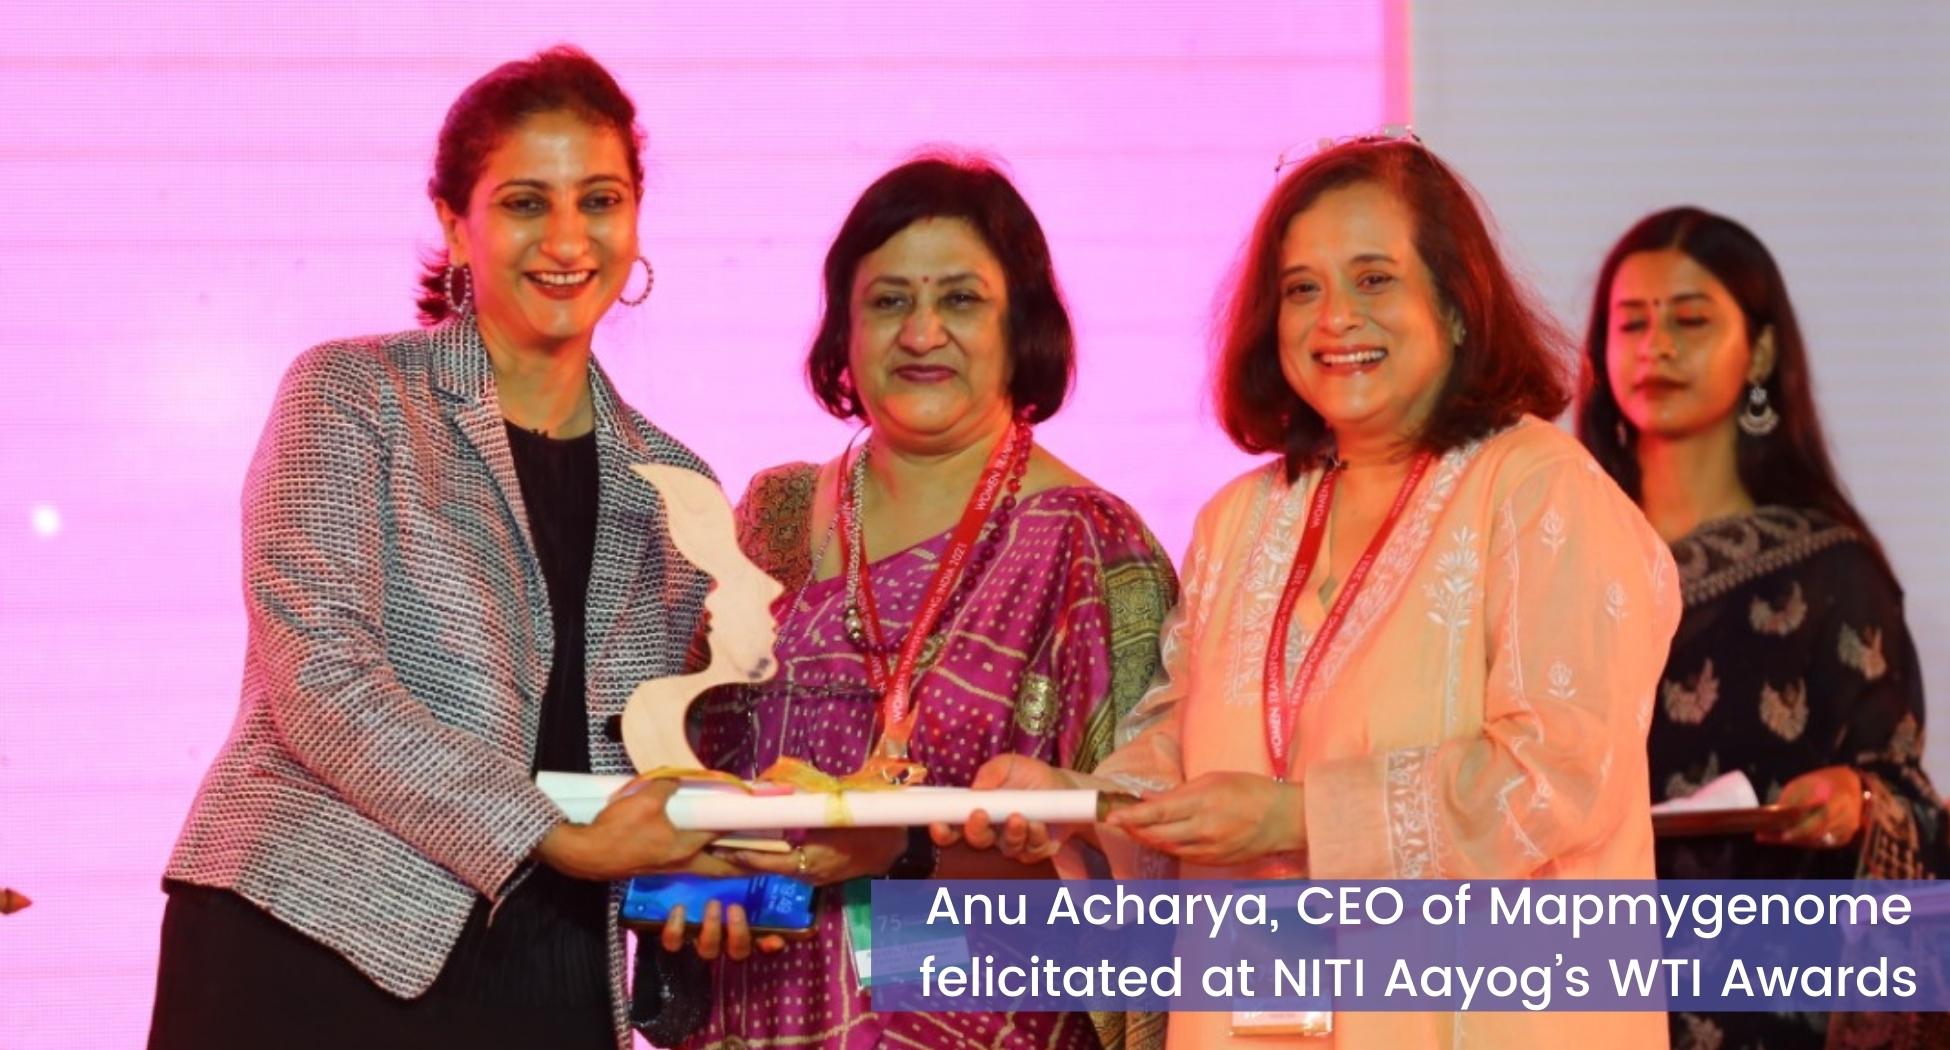 NITI Aayog’s WTI Awards 